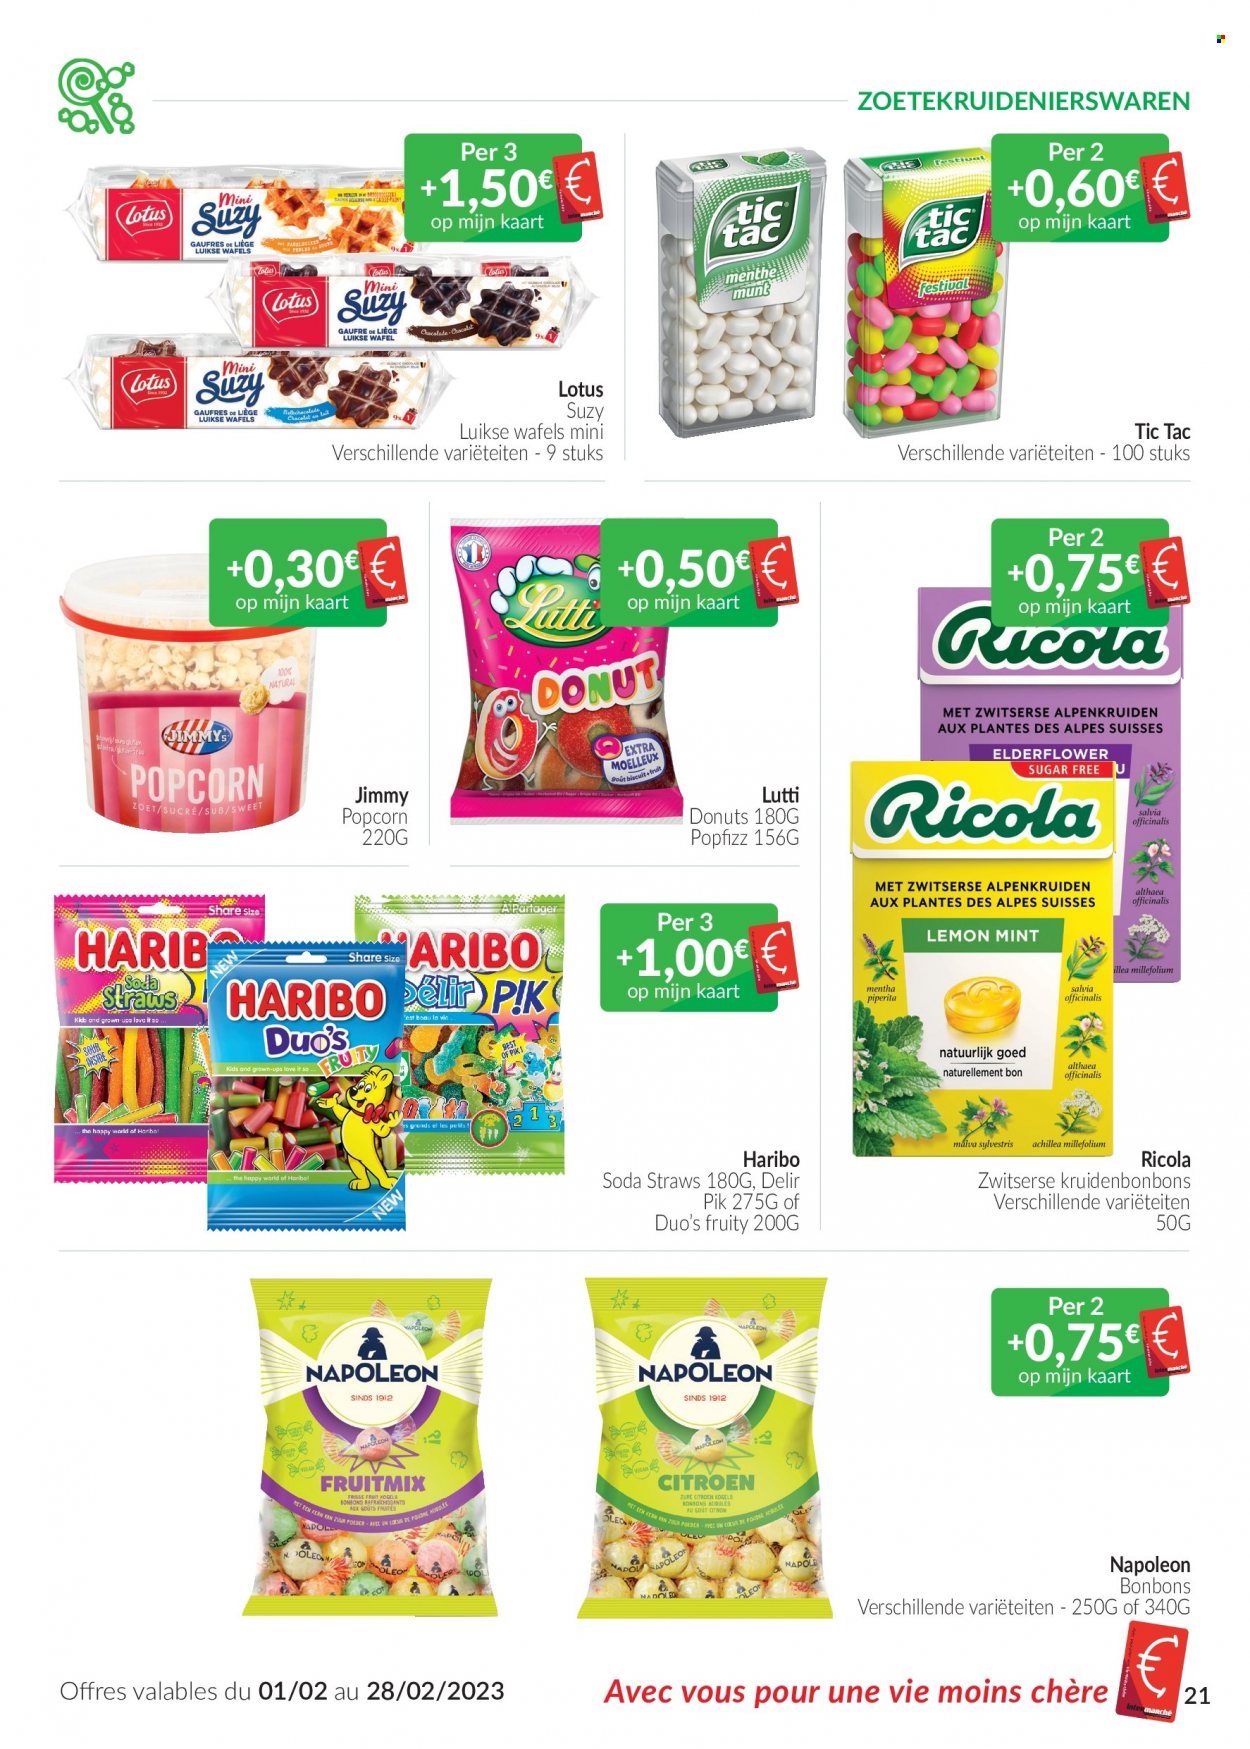 thumbnail - Intermarché-aanbieding - 01/02/2023 - 28/02/2023 -  producten in de aanbieding - Ricola, Haribo, popcorn. Pagina 21.